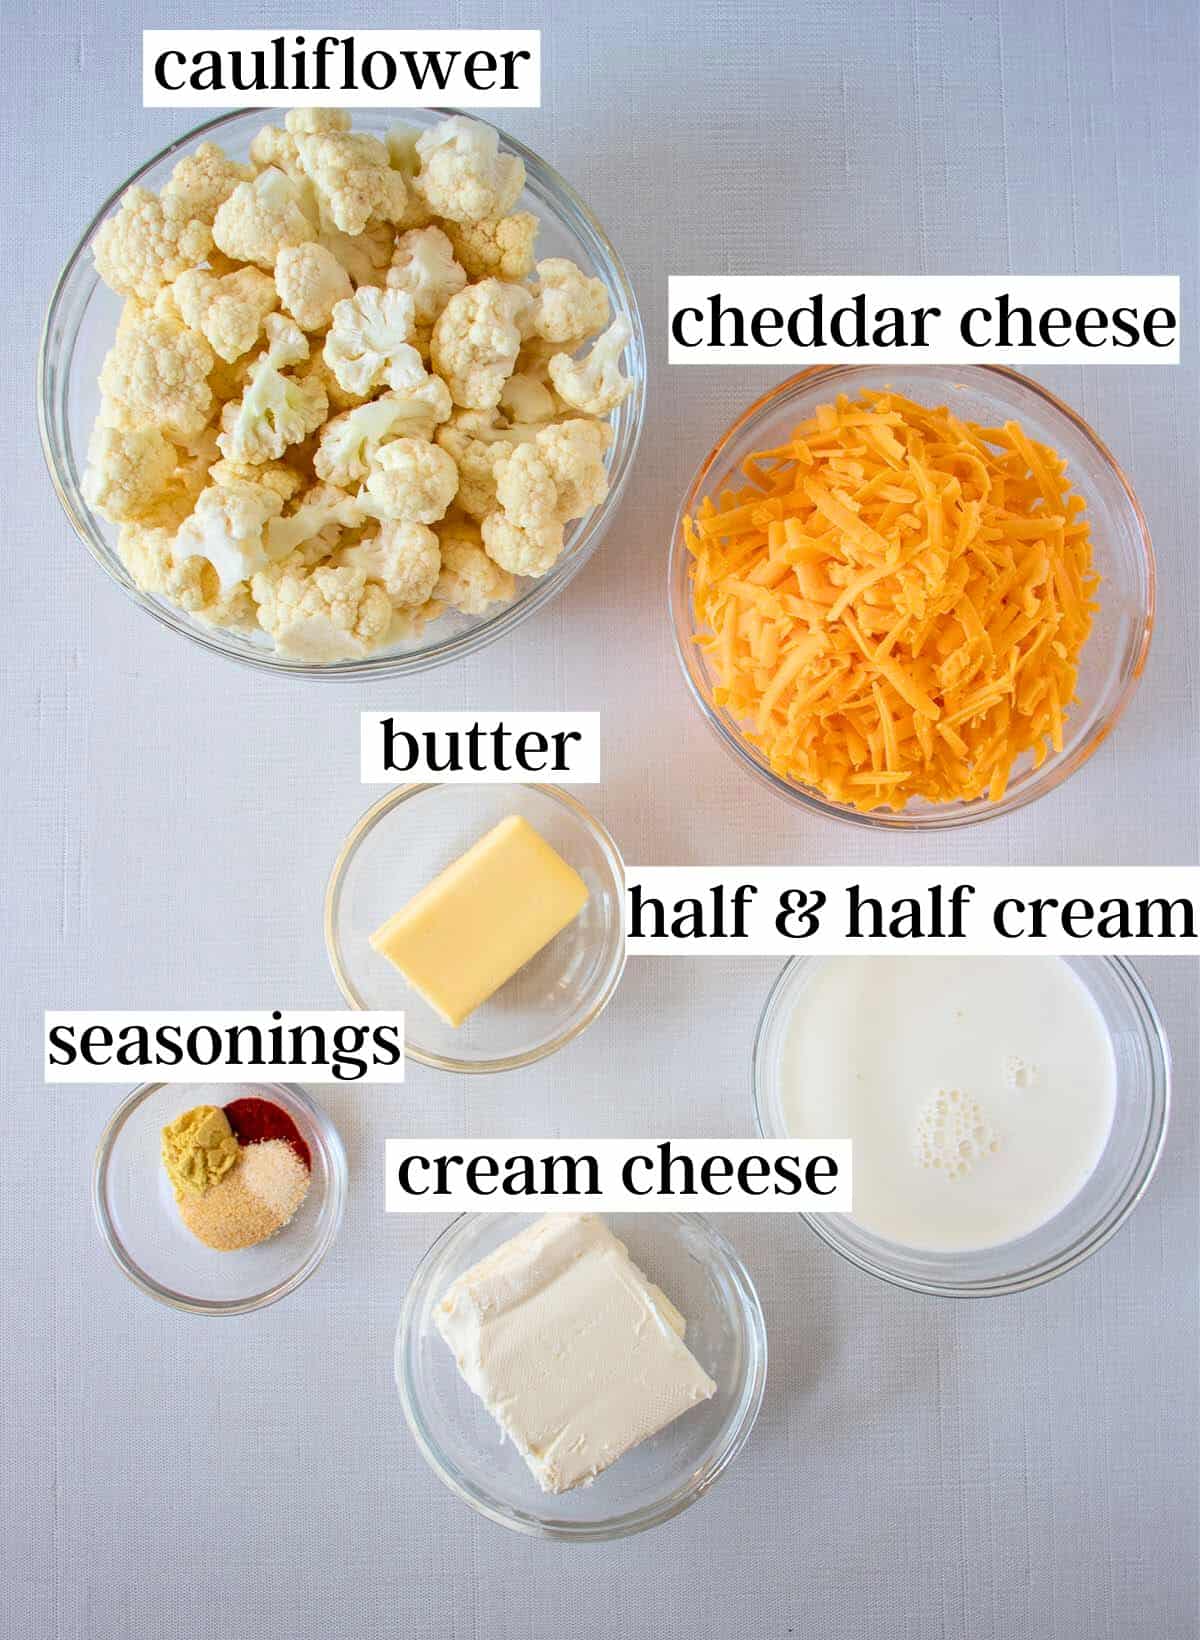 Ingredients for keto cauliflower mac and cheese. Cauliflower florets, cheddar cheese, butter, half & half cream, seasonings, & cream cheese.